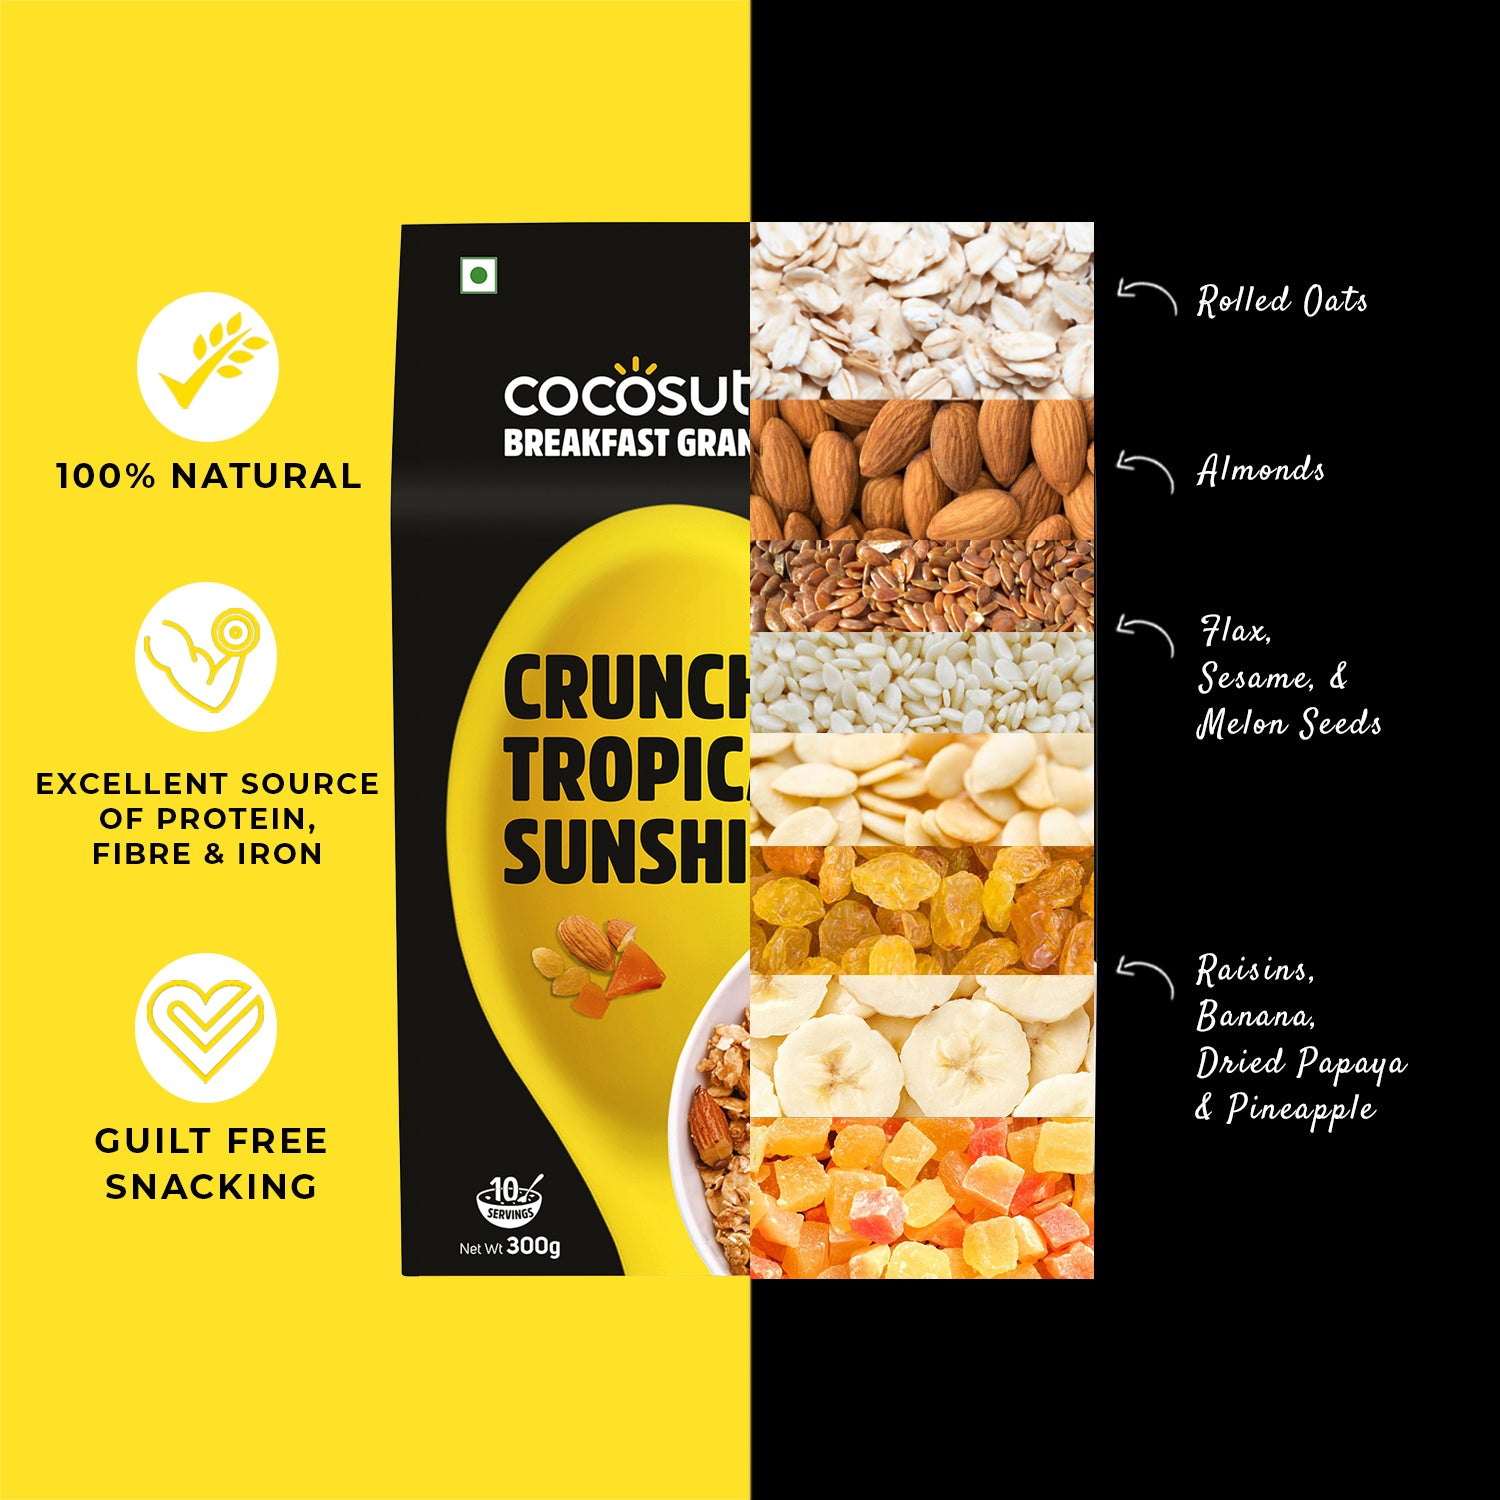 Crunchy Tropical Sunshine Granola Ingredients - Breakfast Sorted Hamper - Cocosutra